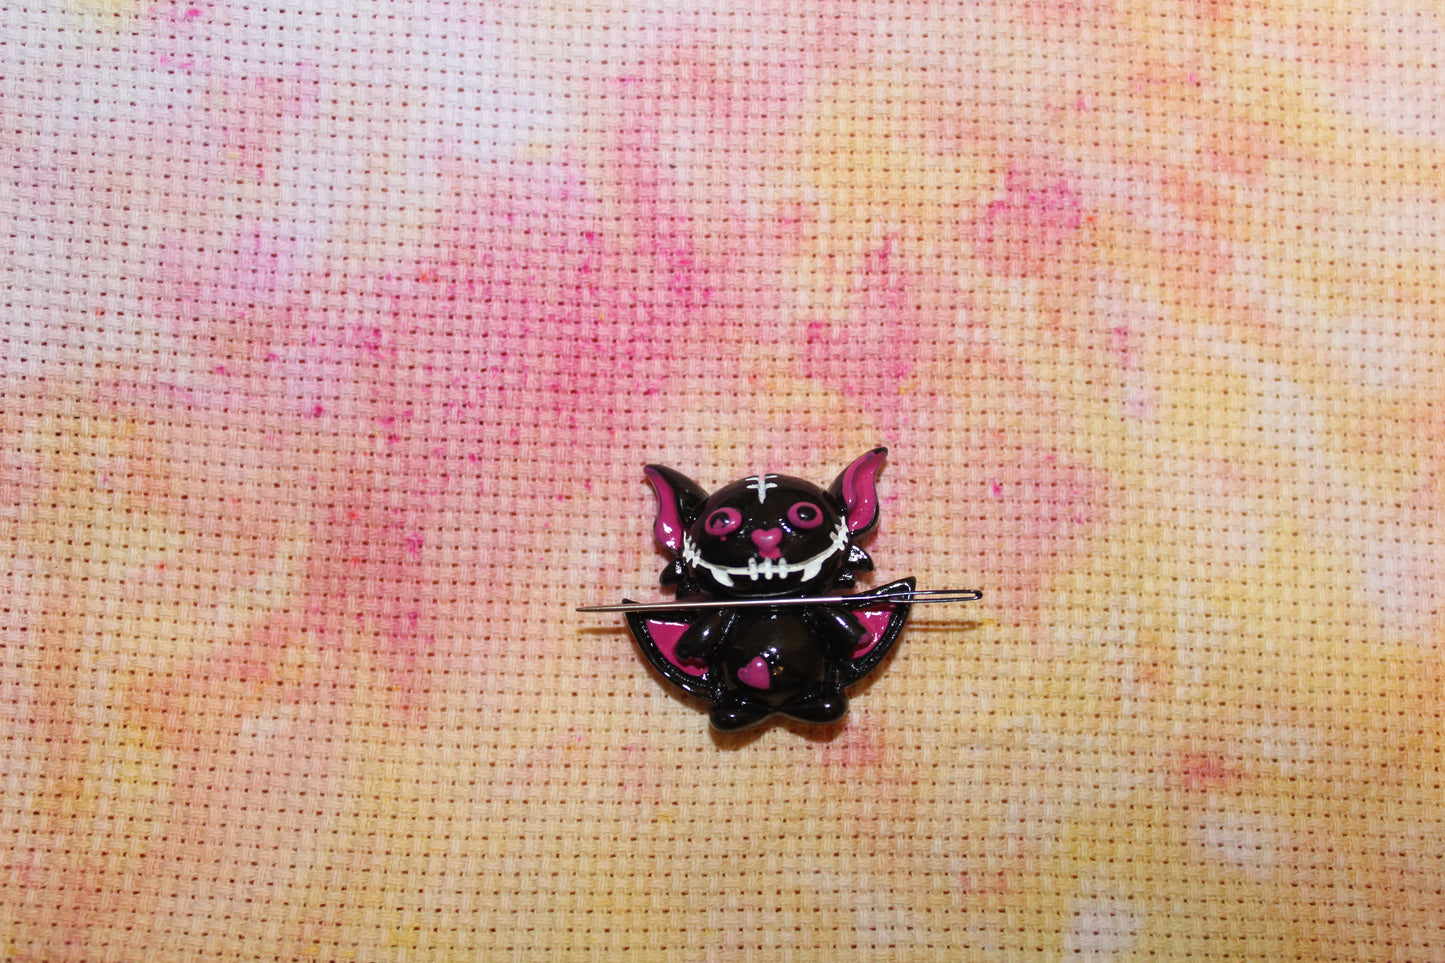 Black Bat Cute Needle Minder